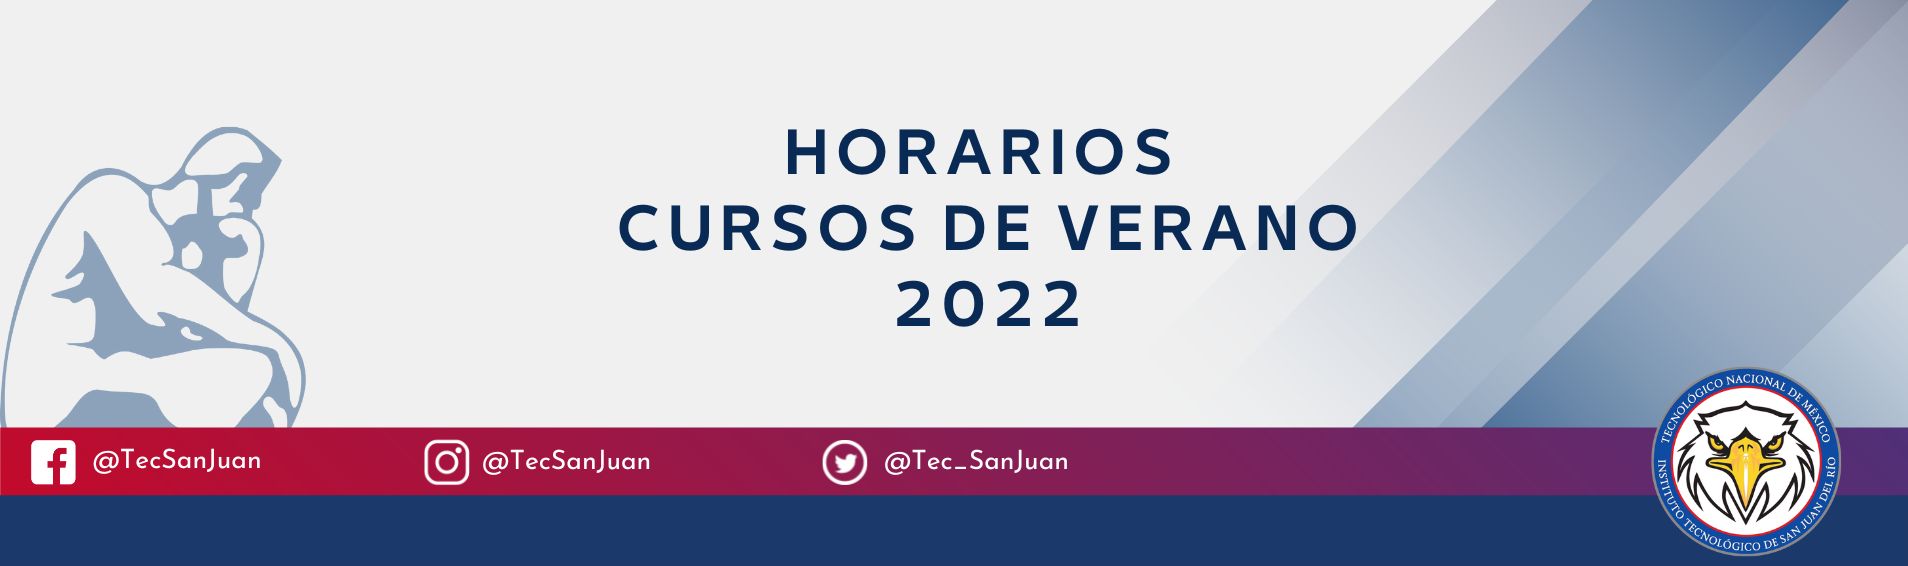 BANNER CURSOS DE VERANO 2022